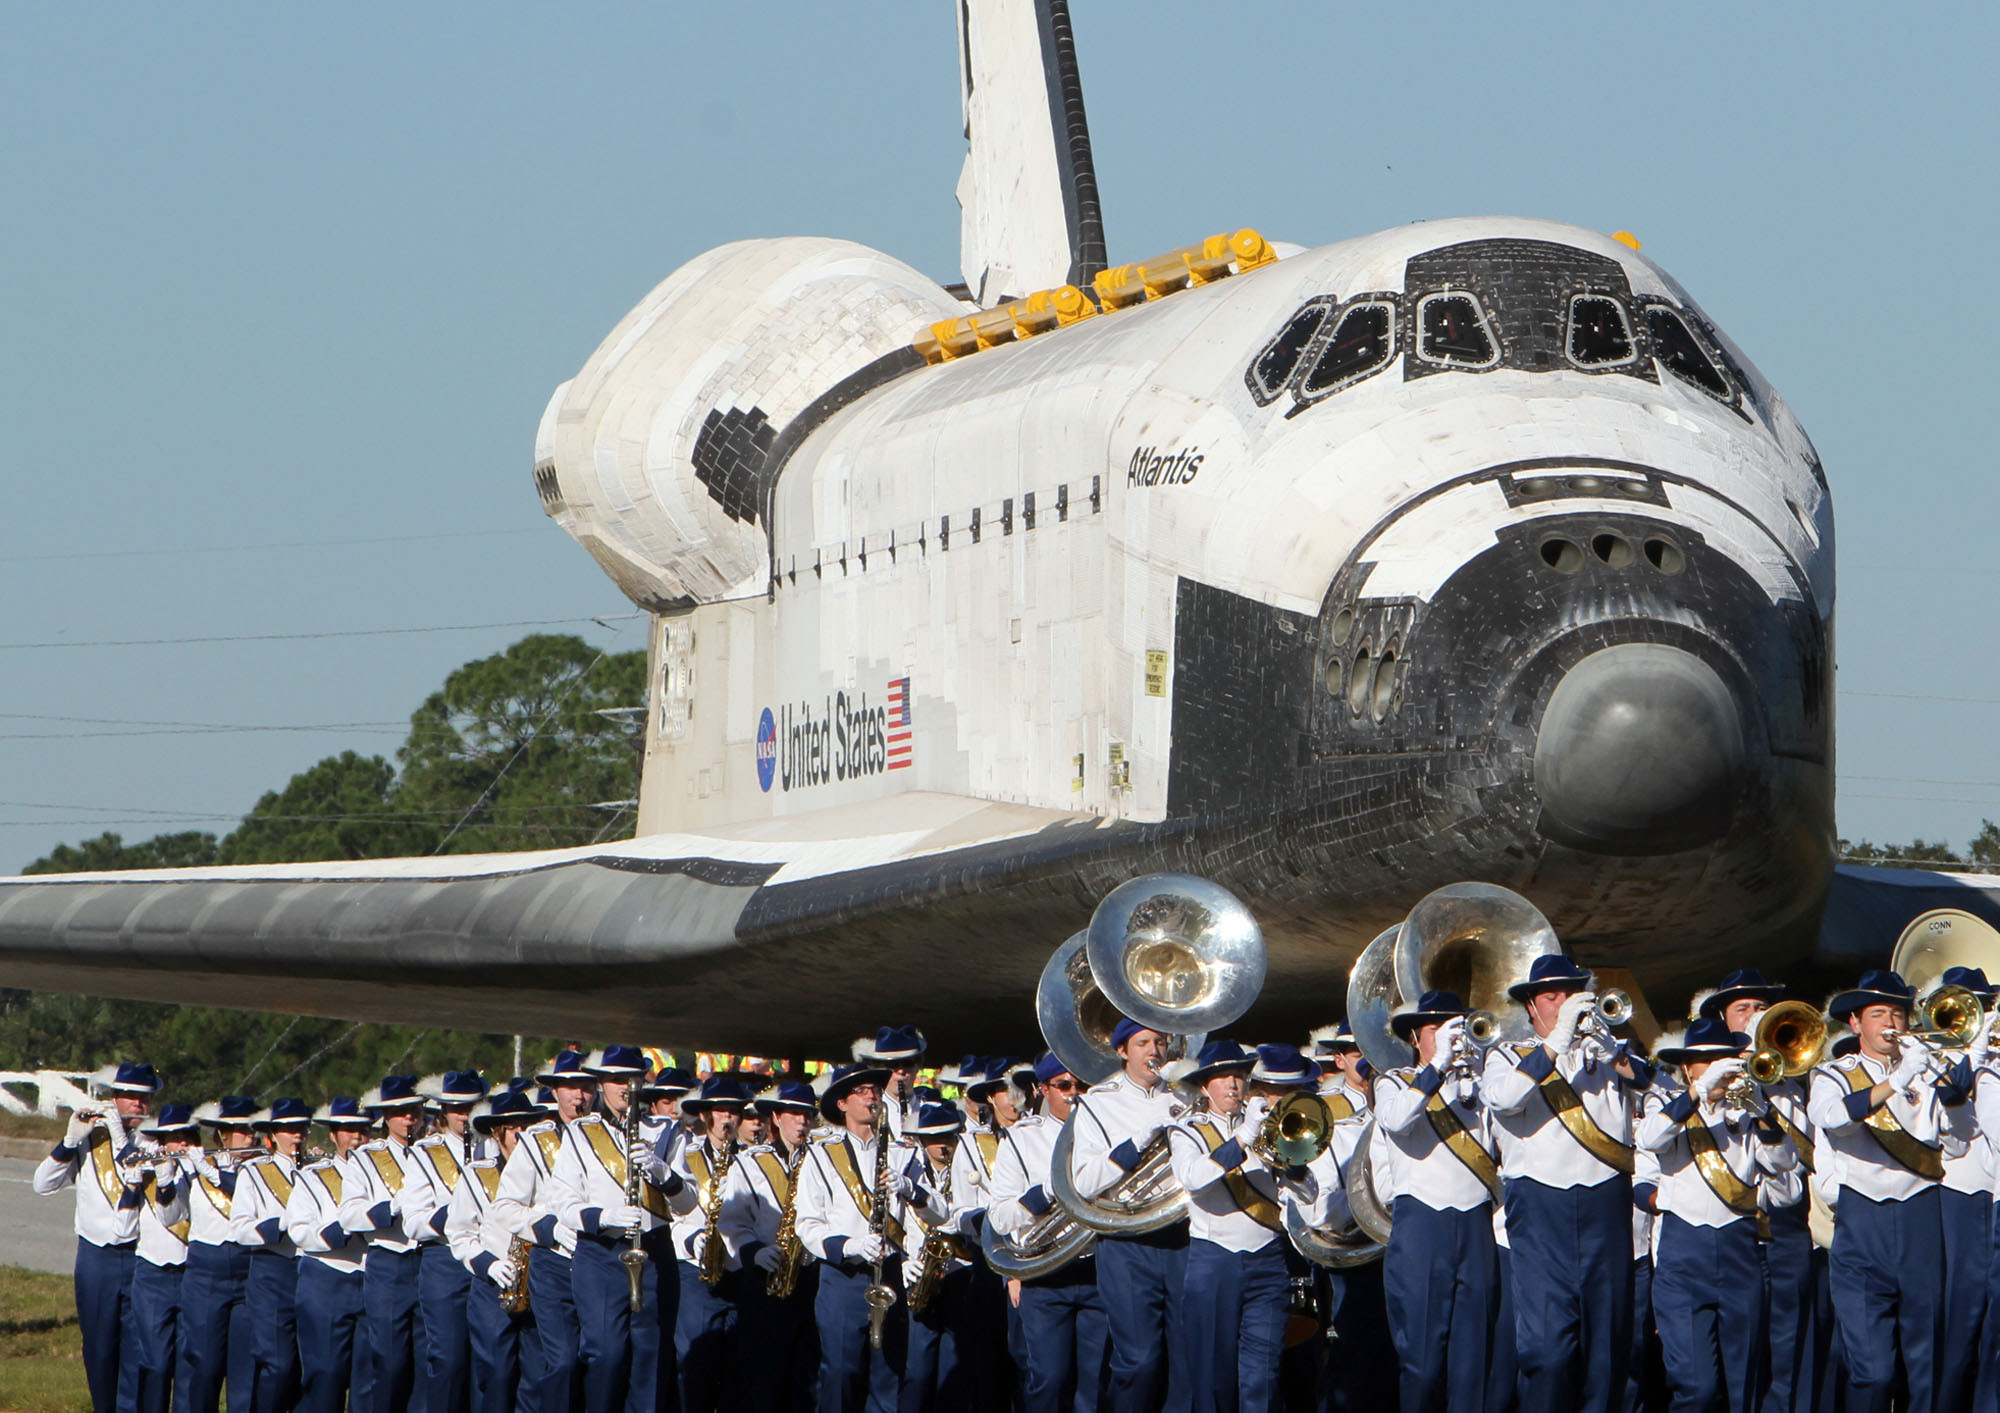 Pictures: Space shuttle Atlantis last trip - Orlando Sentinel